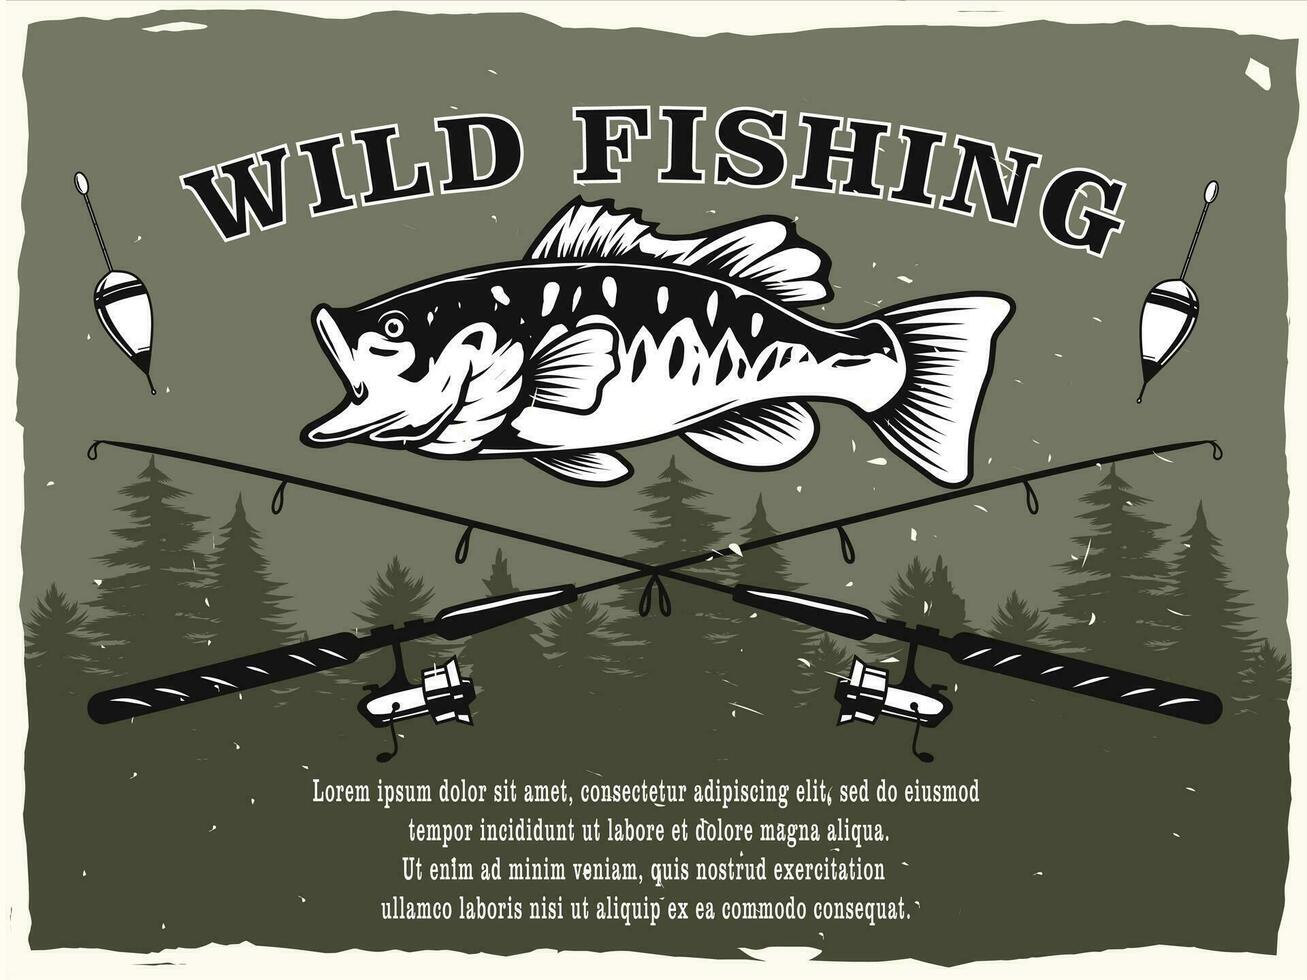 wild largemouth bass fishing poster design vector